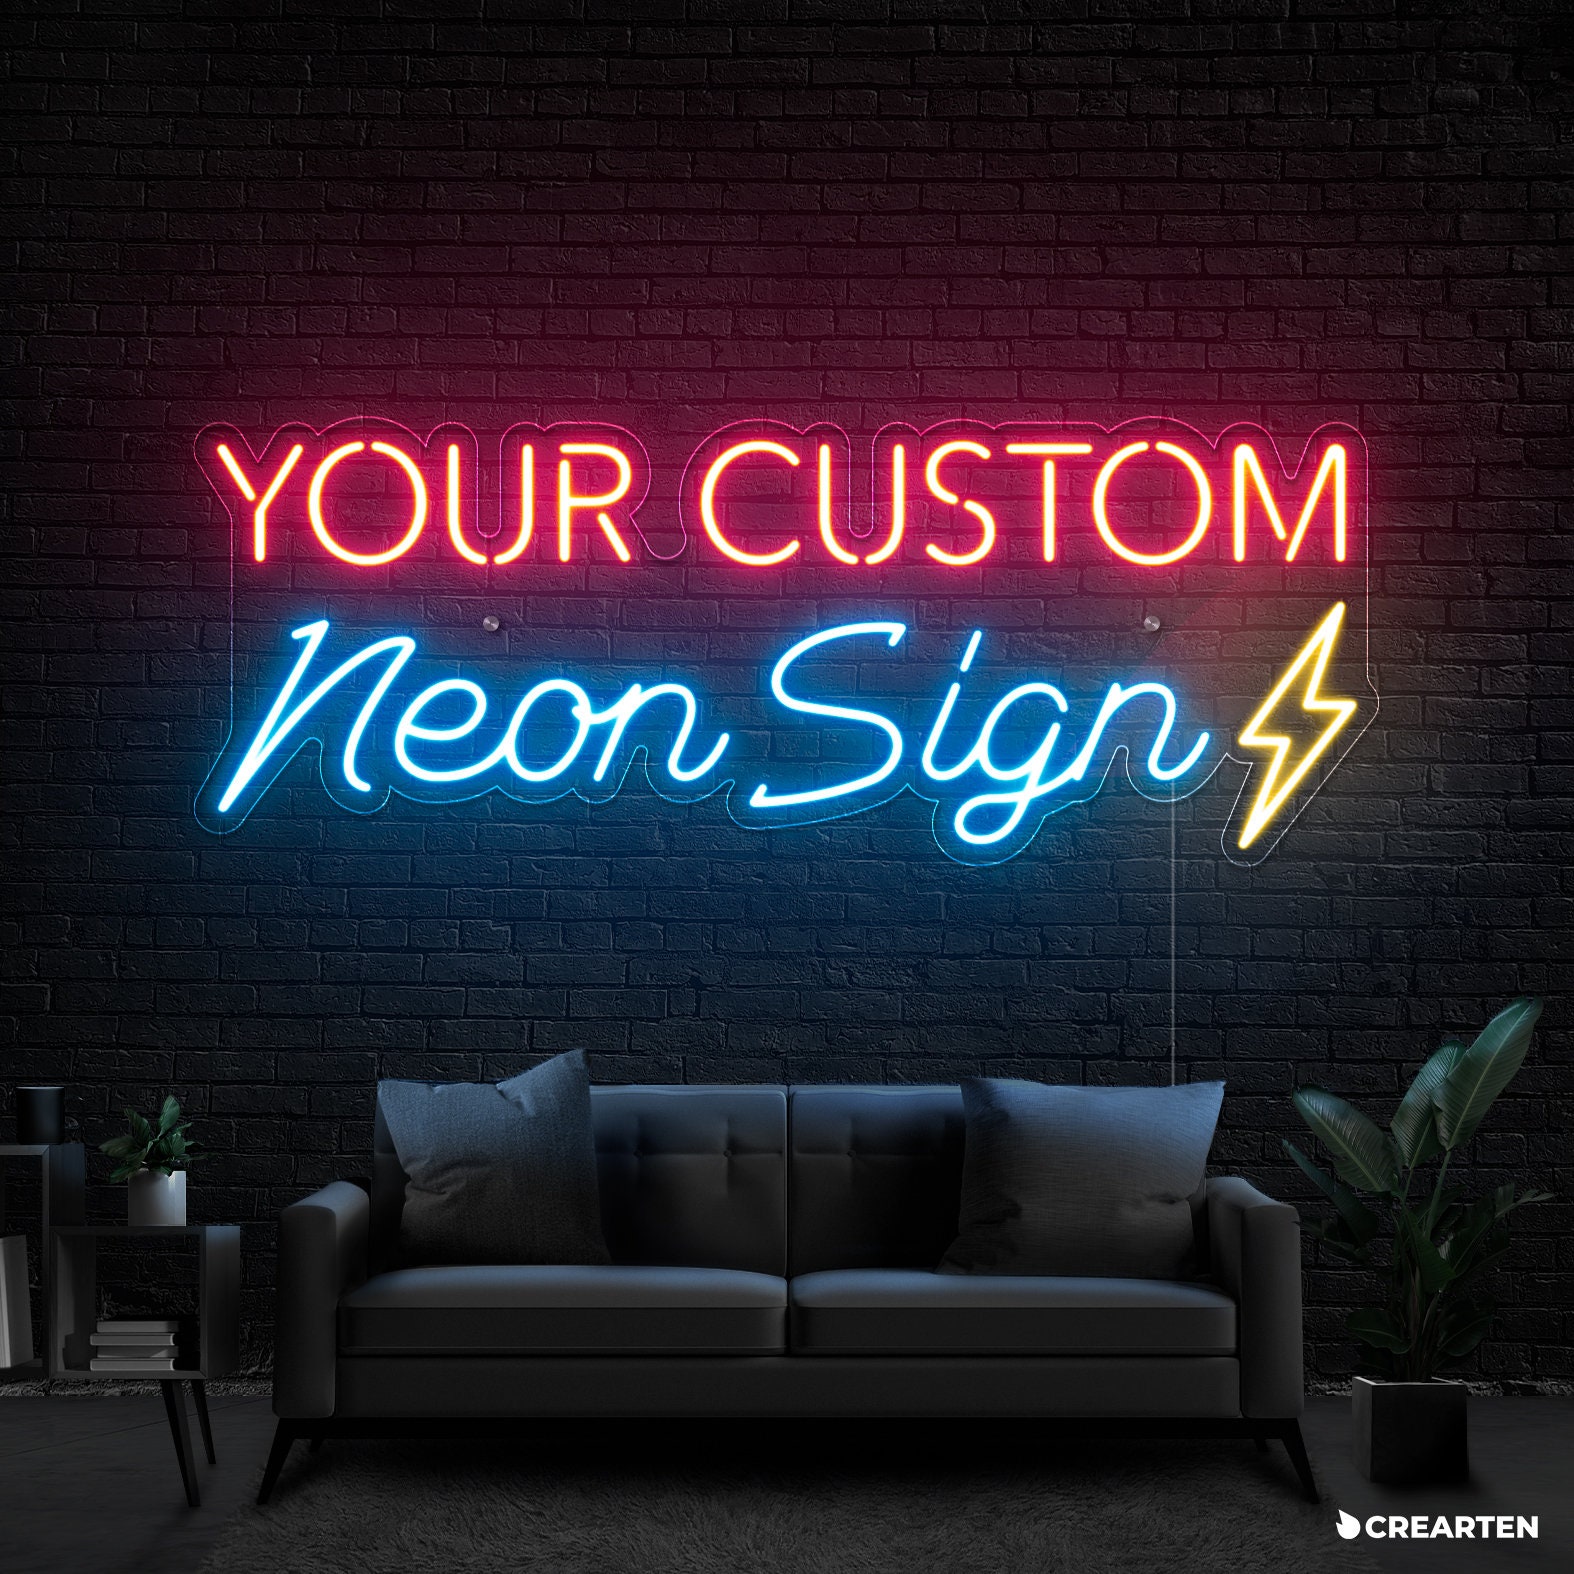 Custom Neon Signs